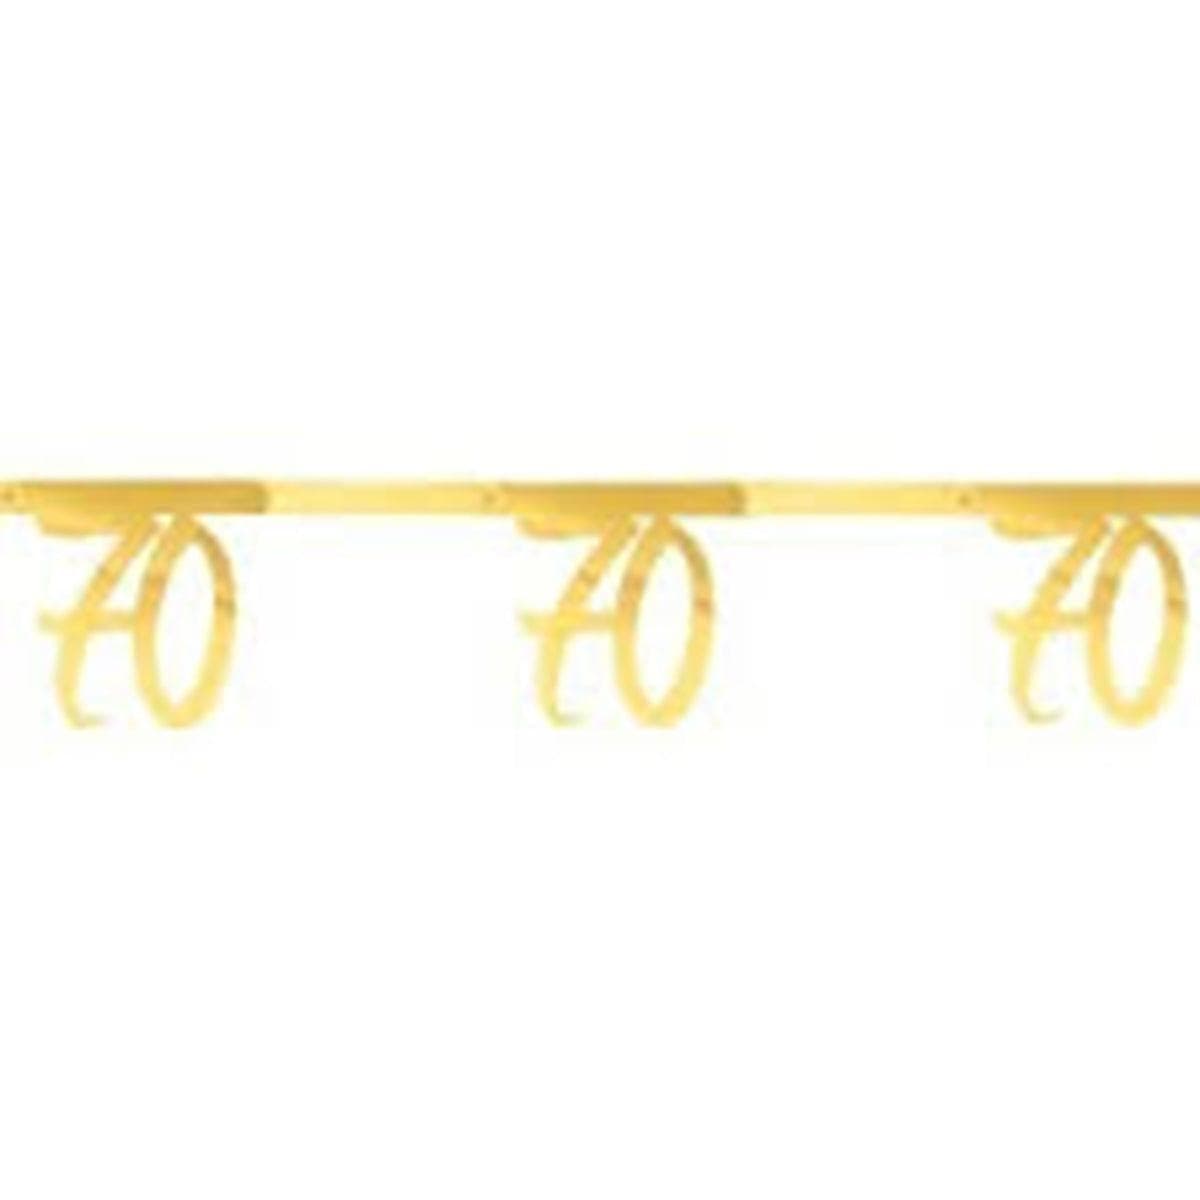 SANTEX Age Specific Birthday 70 Years Old Birthday Banner, Metallic Gold